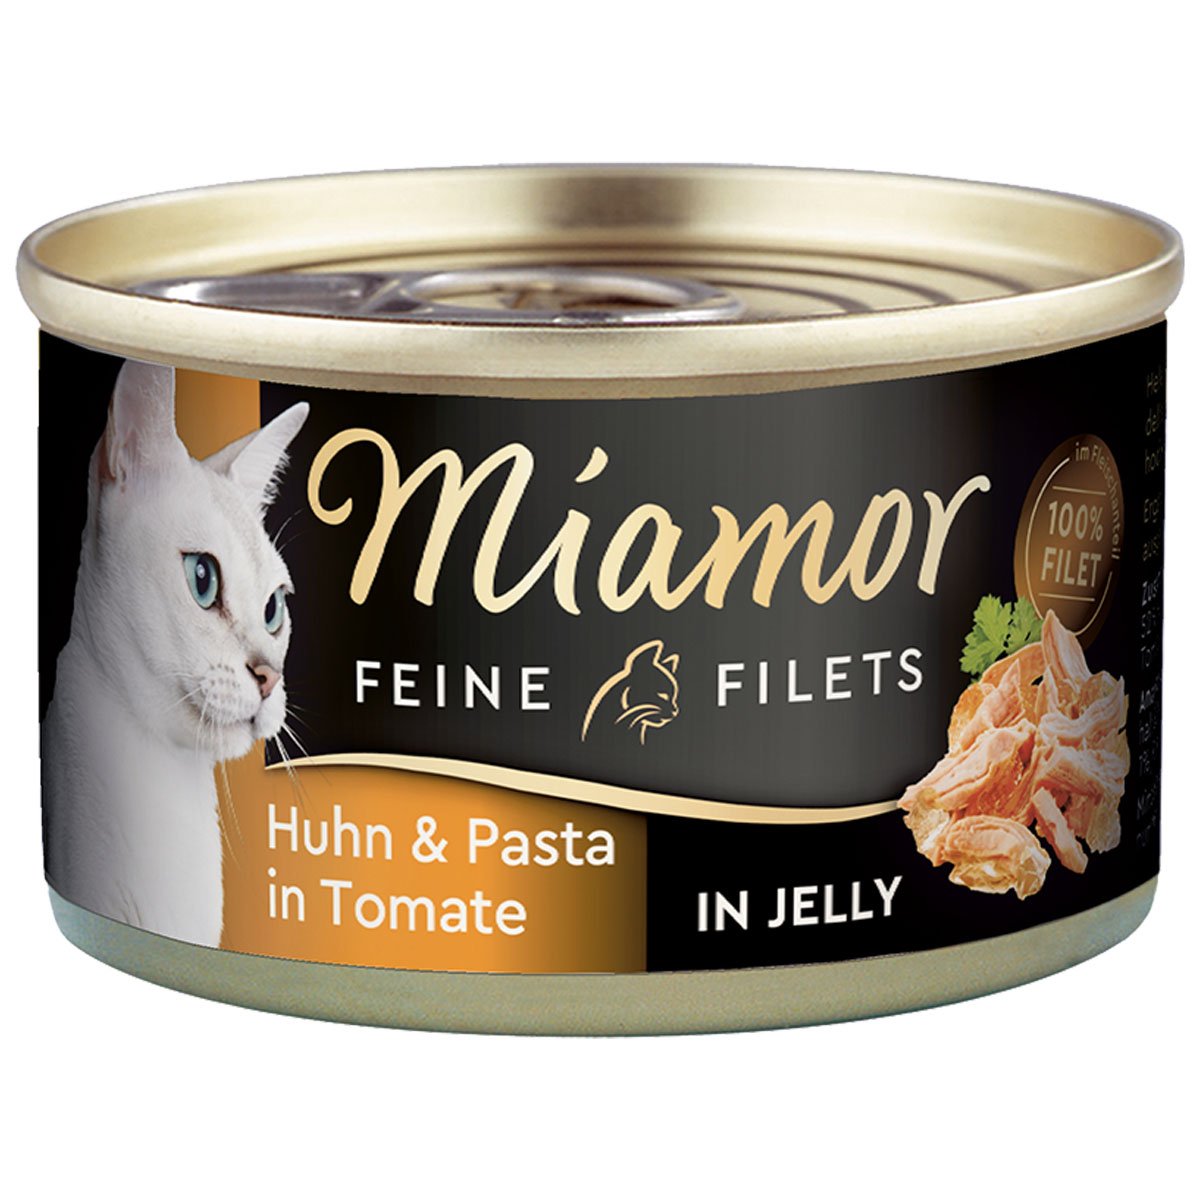 Miamor Feine Filets in Jelly Huhn und Pasta 100g Dose 48x100g von Miamor